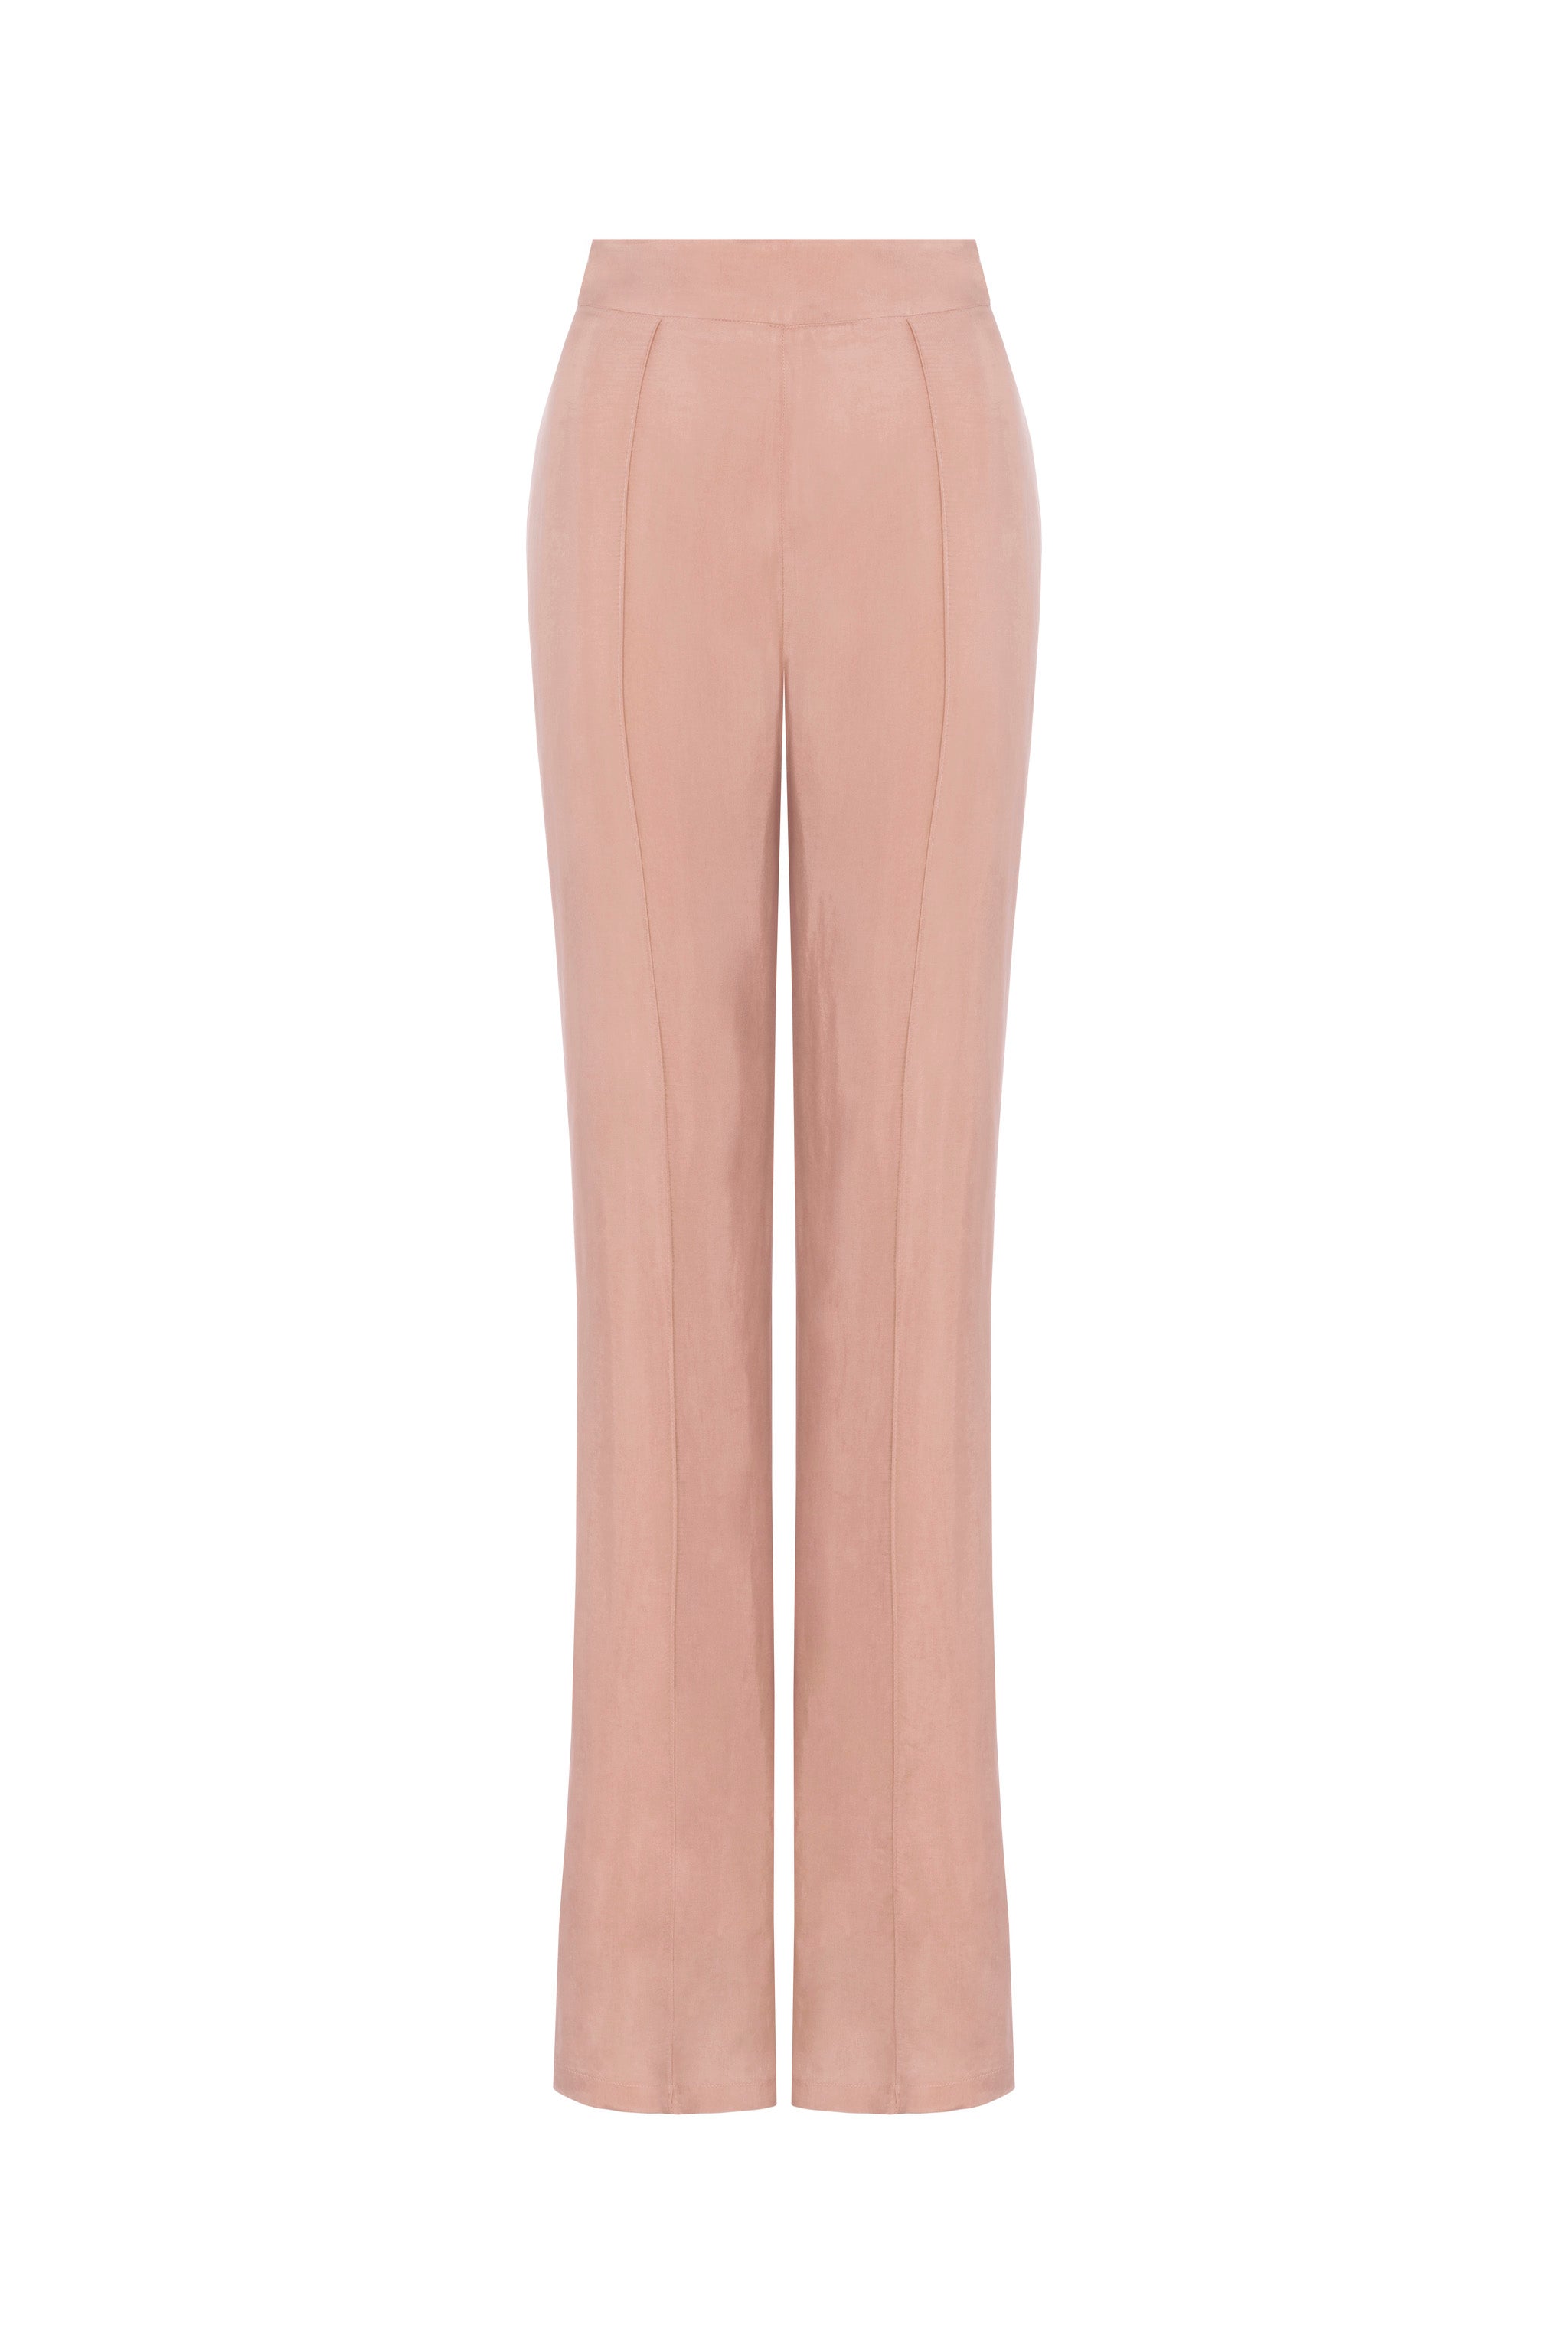 Cupra Trouser Suit (Blush)